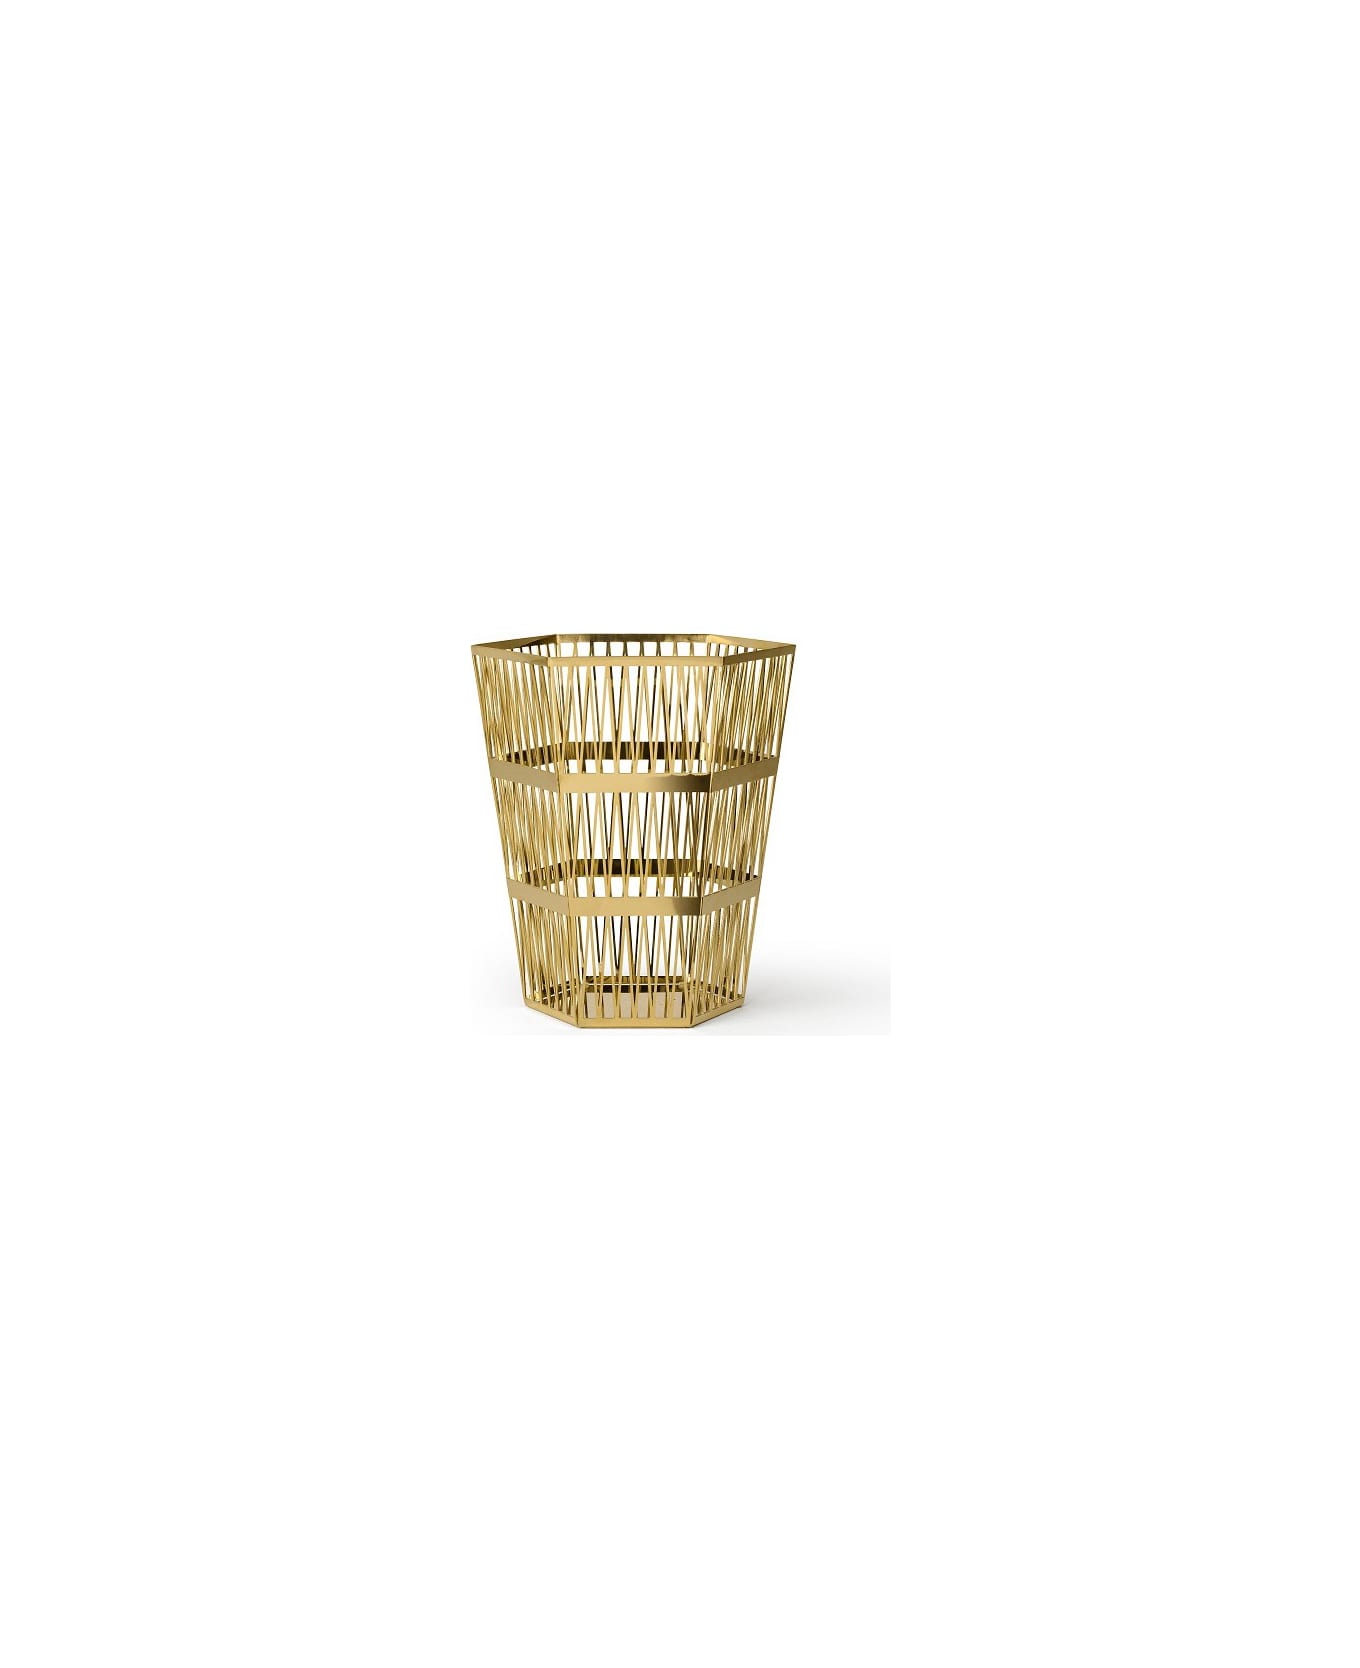 Ghidini 1961 Tip Top - Large Paper Basket Polished Gold - Polished gold インテリア雑貨